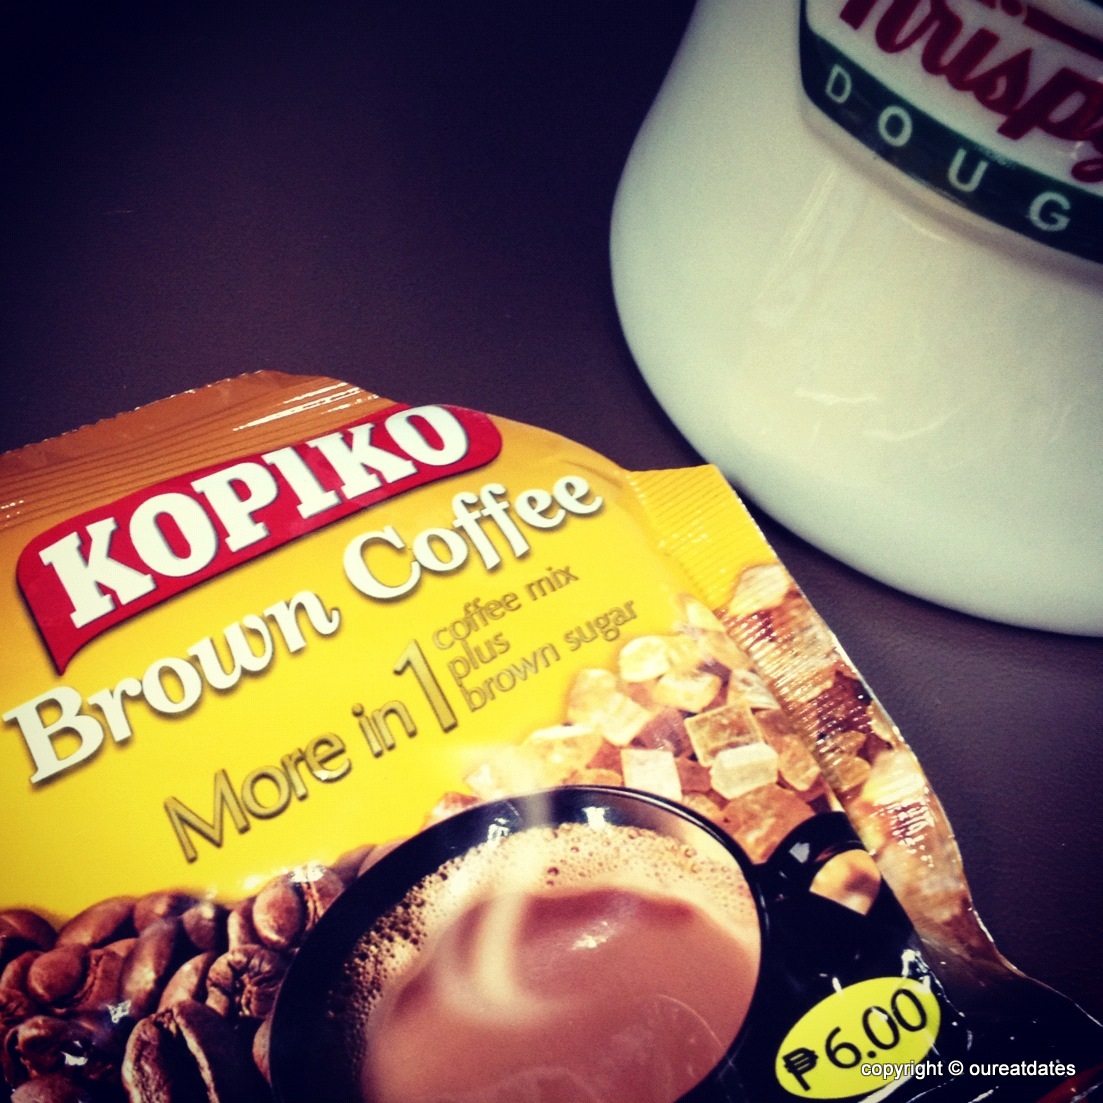 Kopiko Brown Coffee Price